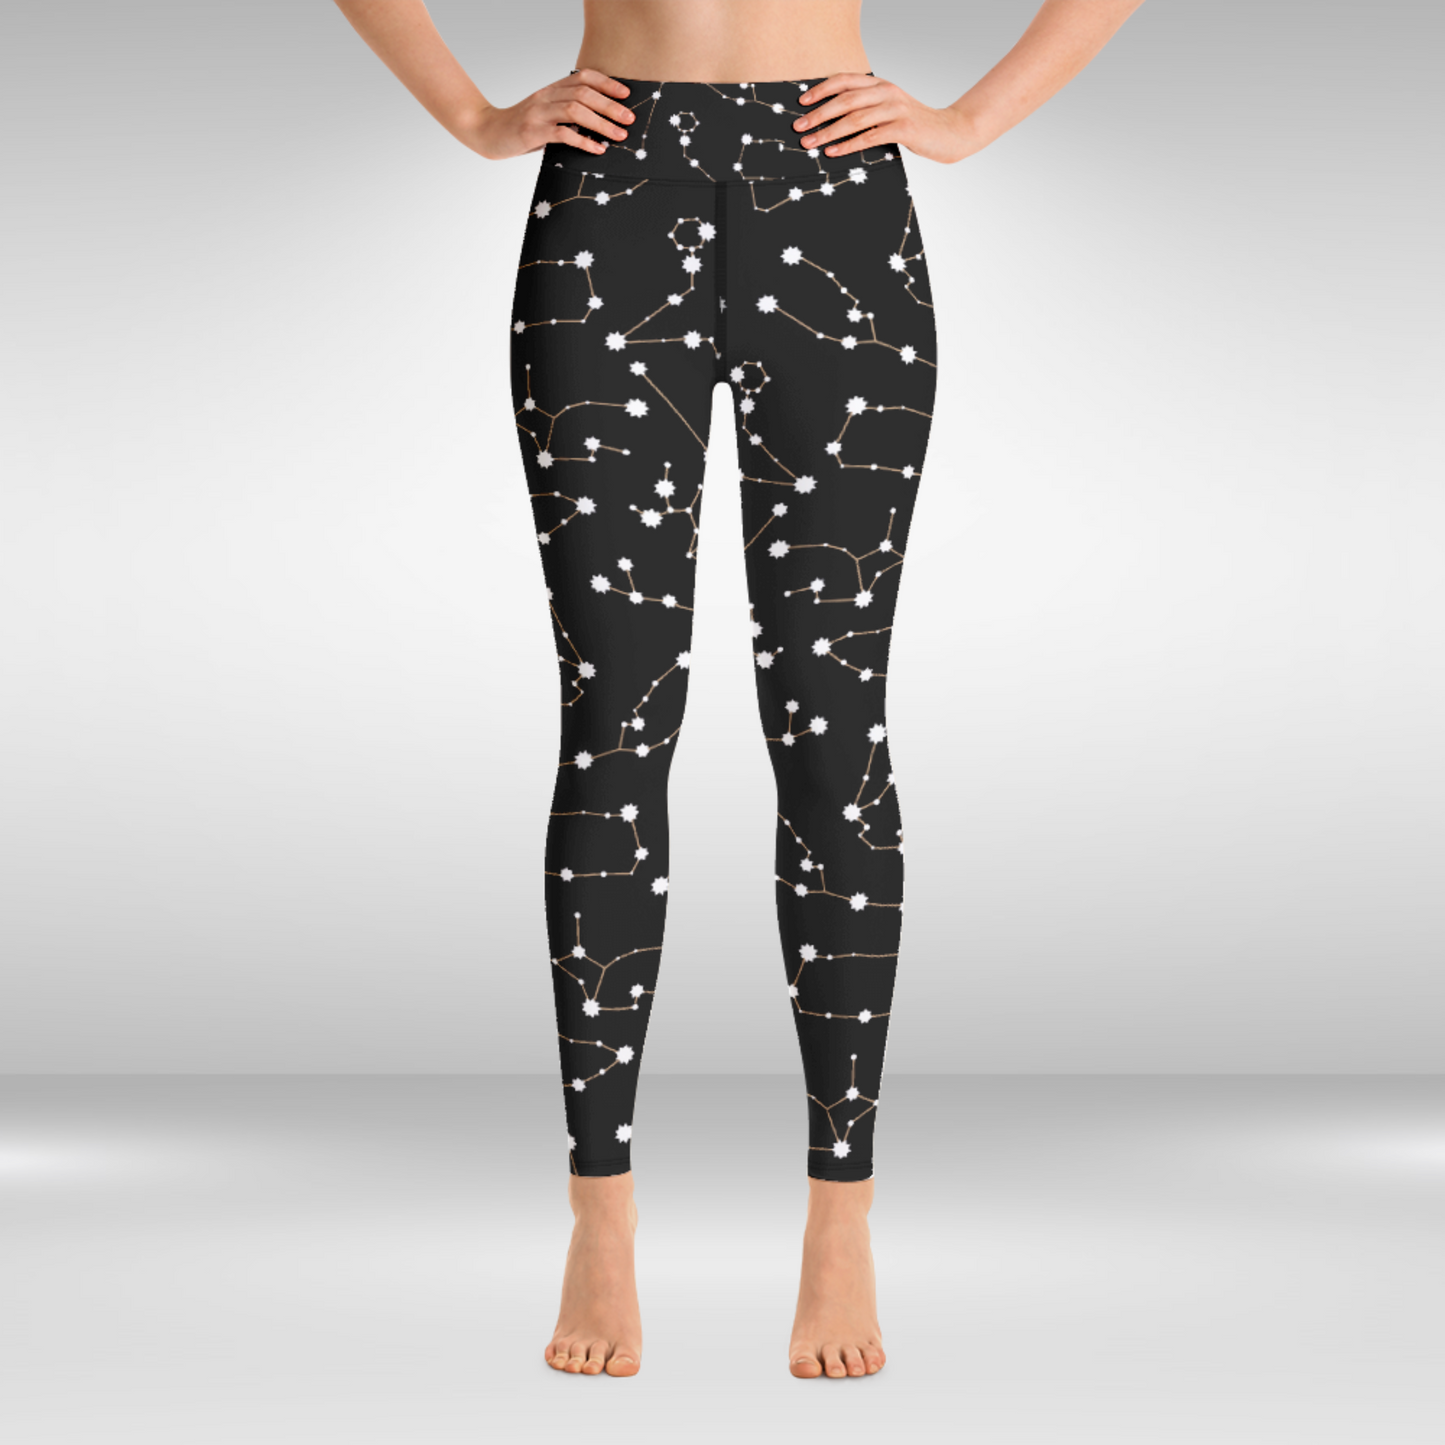 Women Yoga Legging - Black Constellation Print